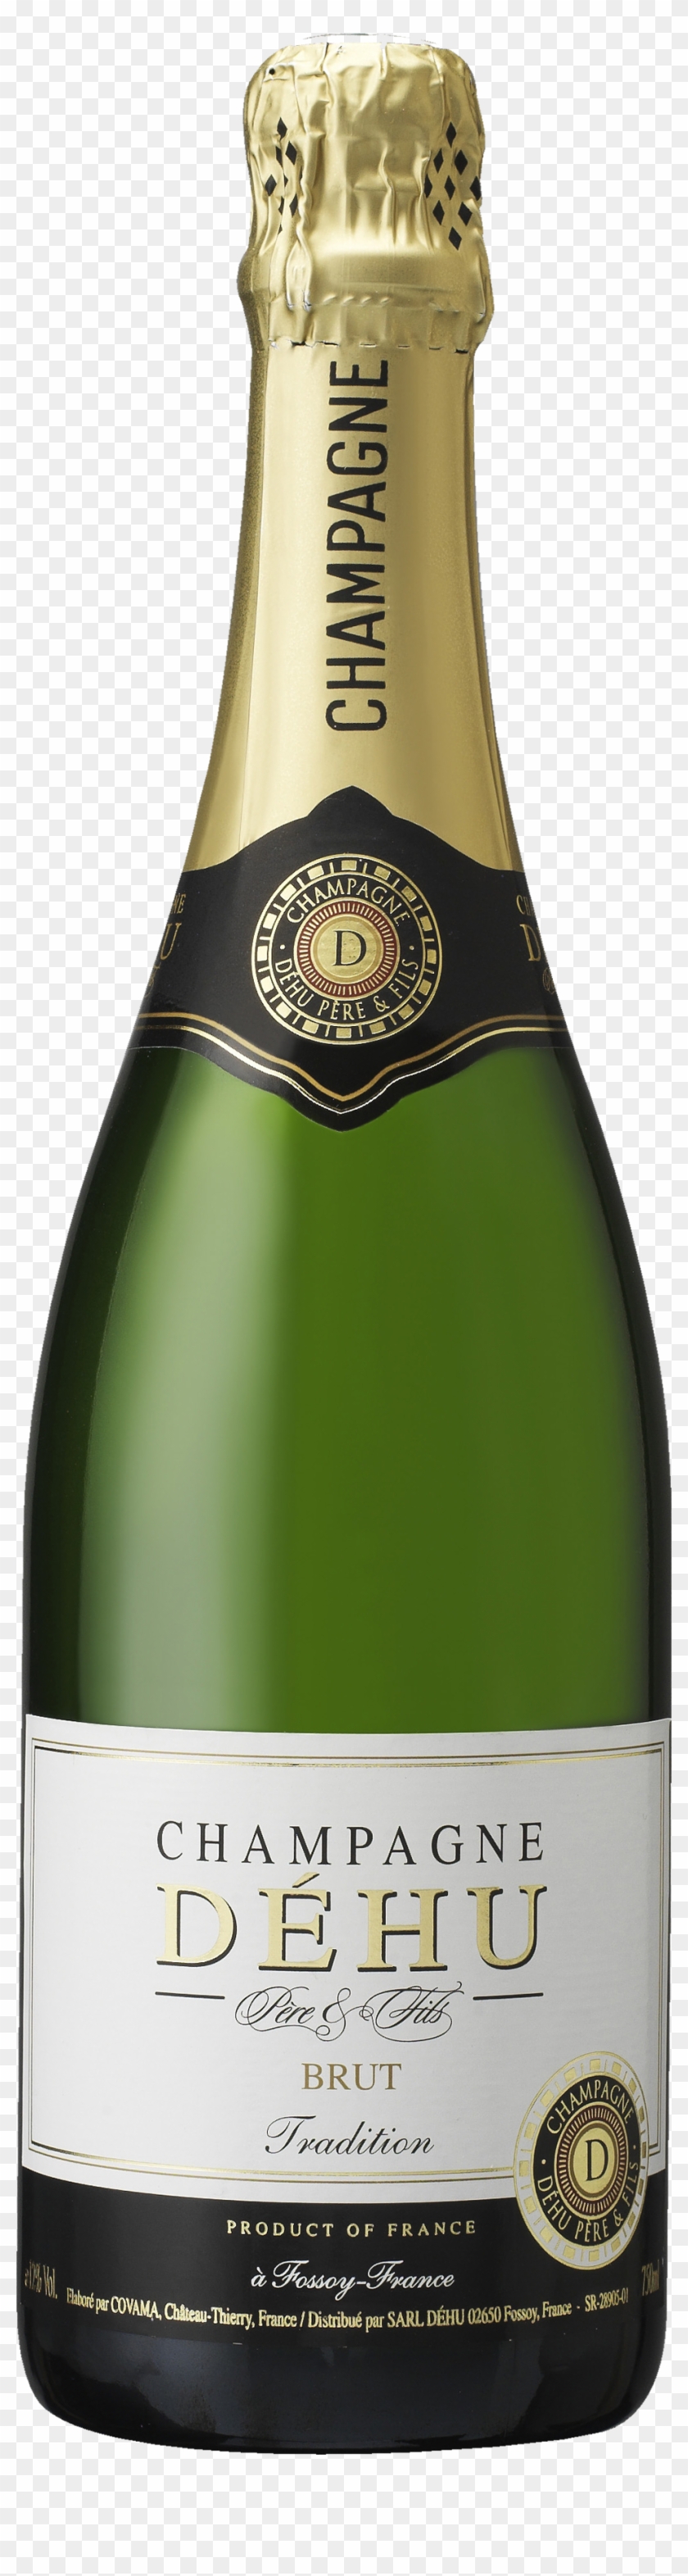 Bottle Hd Png - Champagne Bottle Png Clipart #367960